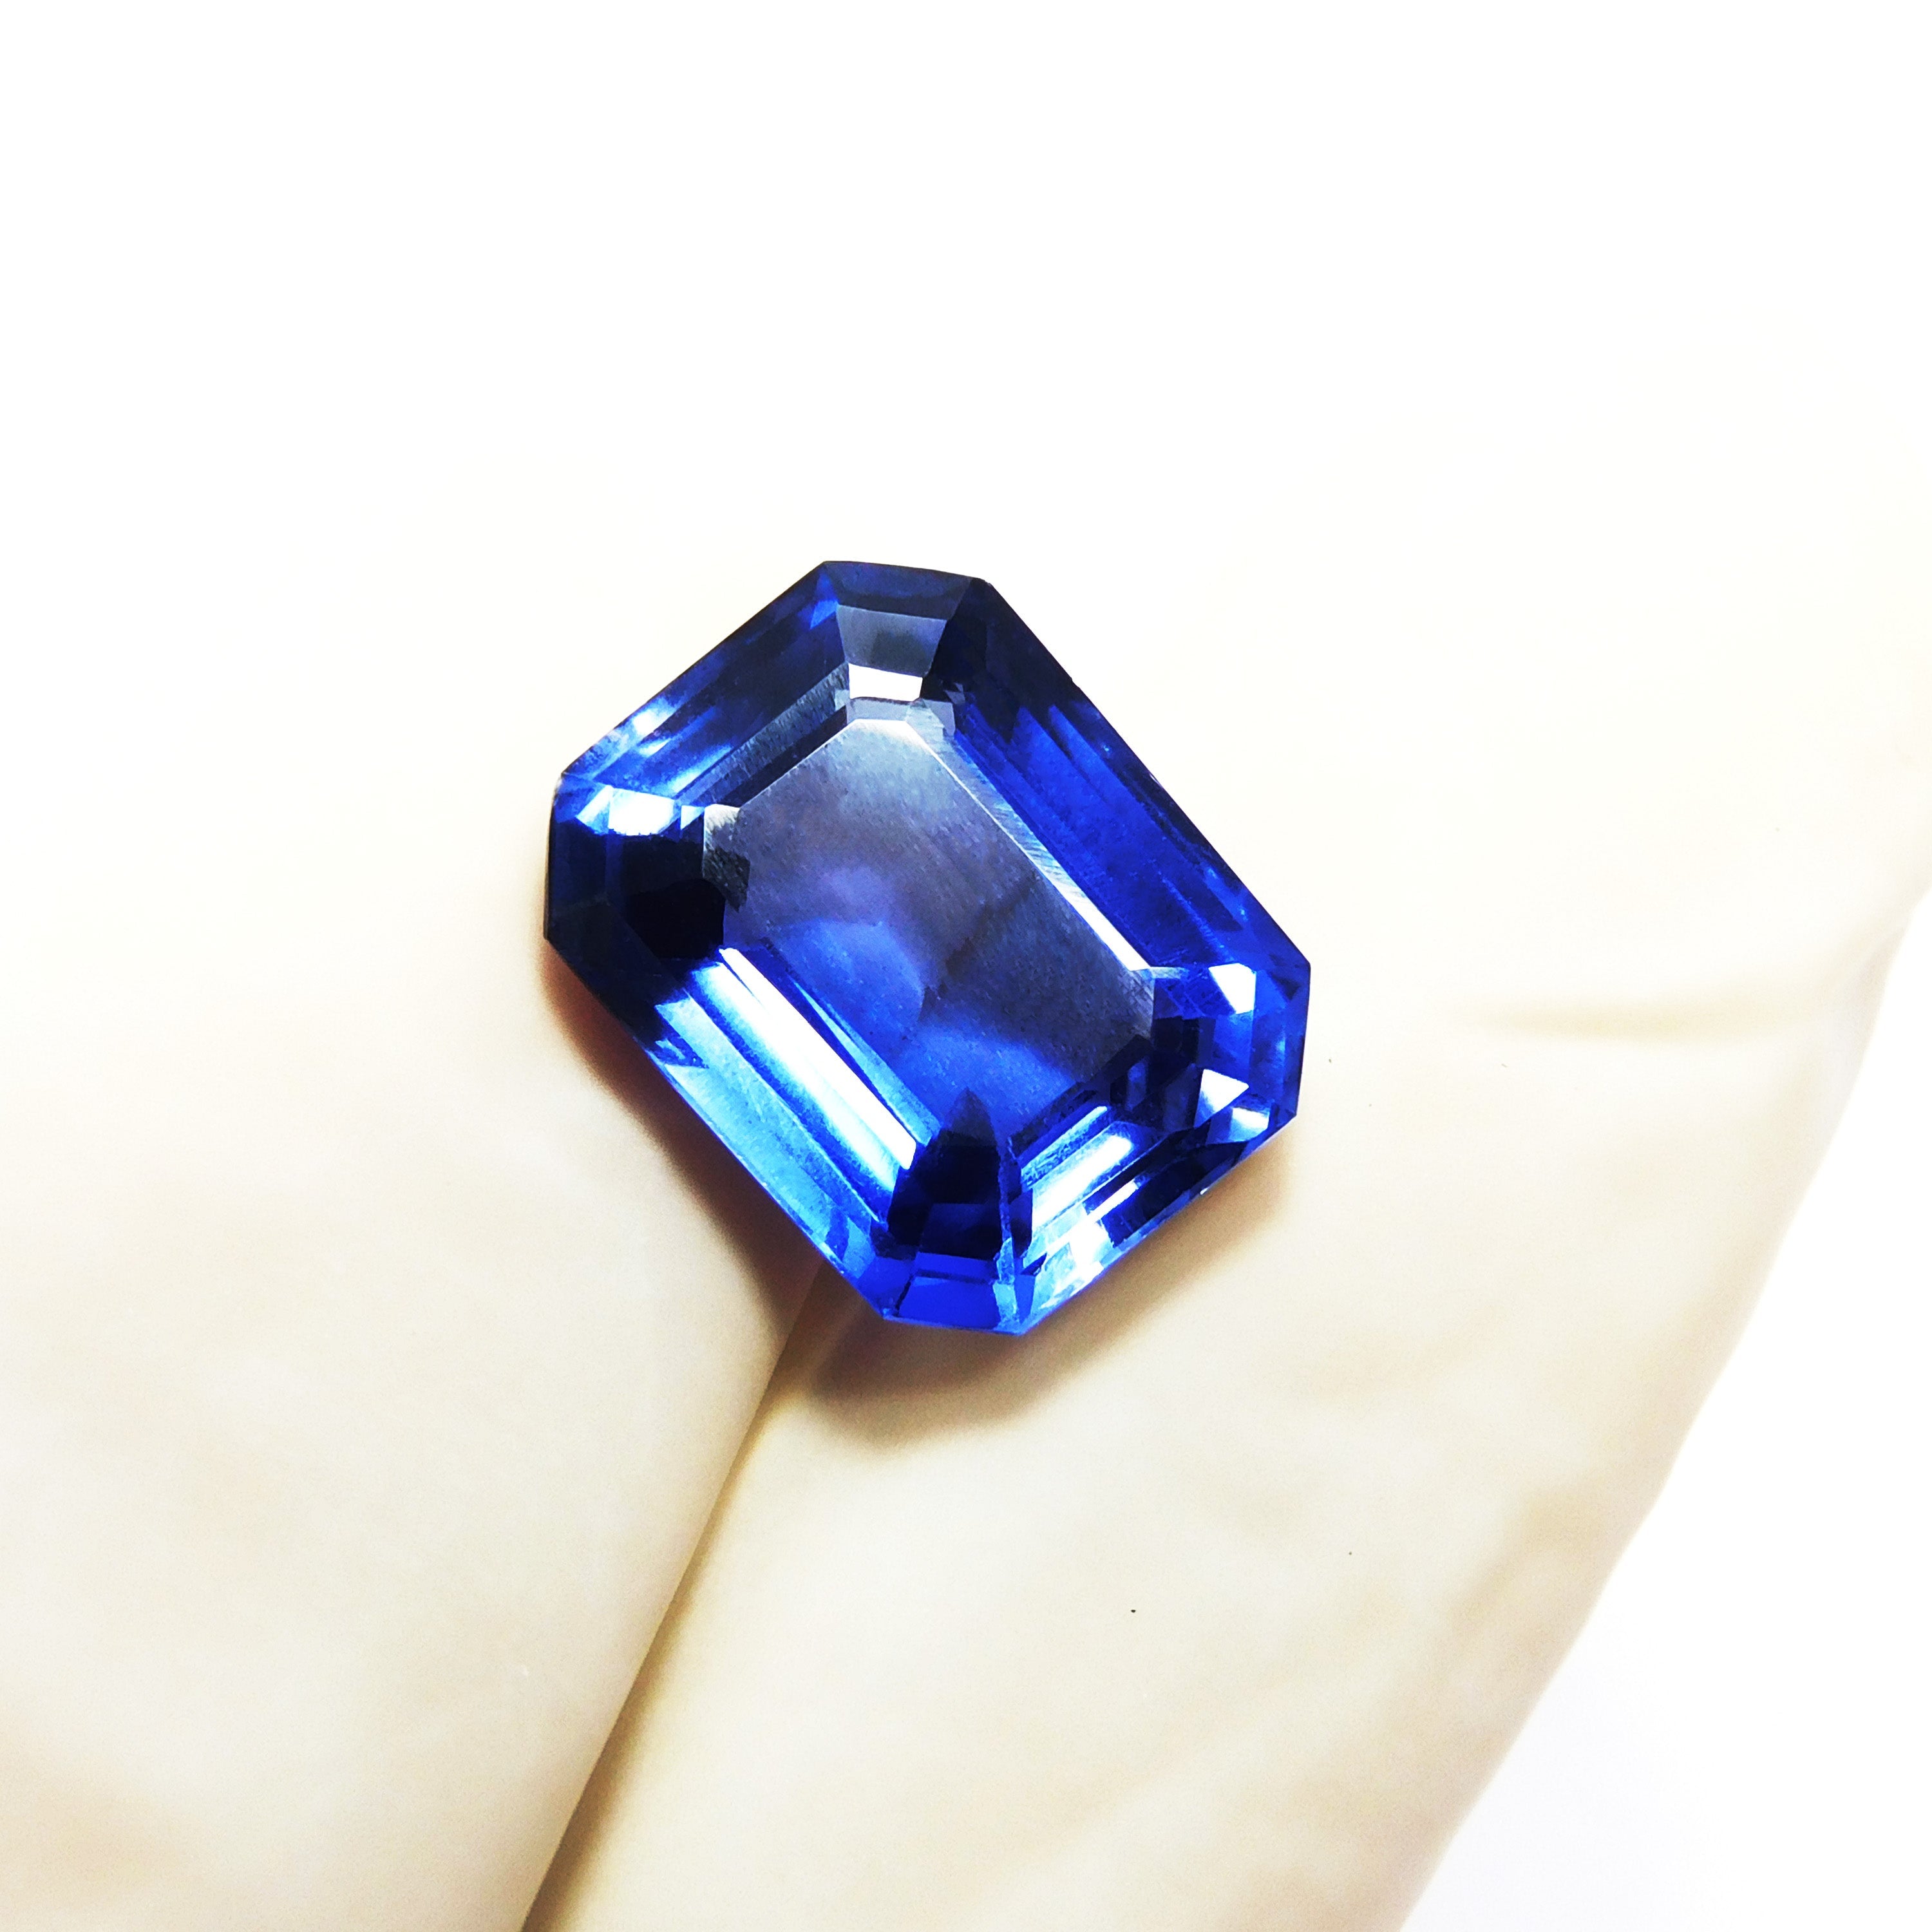 For Beautiful Jwelery 9.78 Carat Natural Blue Tanzanite Emerald Cut Certified Loose Gemstone | TANZANITE- Metaphysical Properties & Spiritual Protection